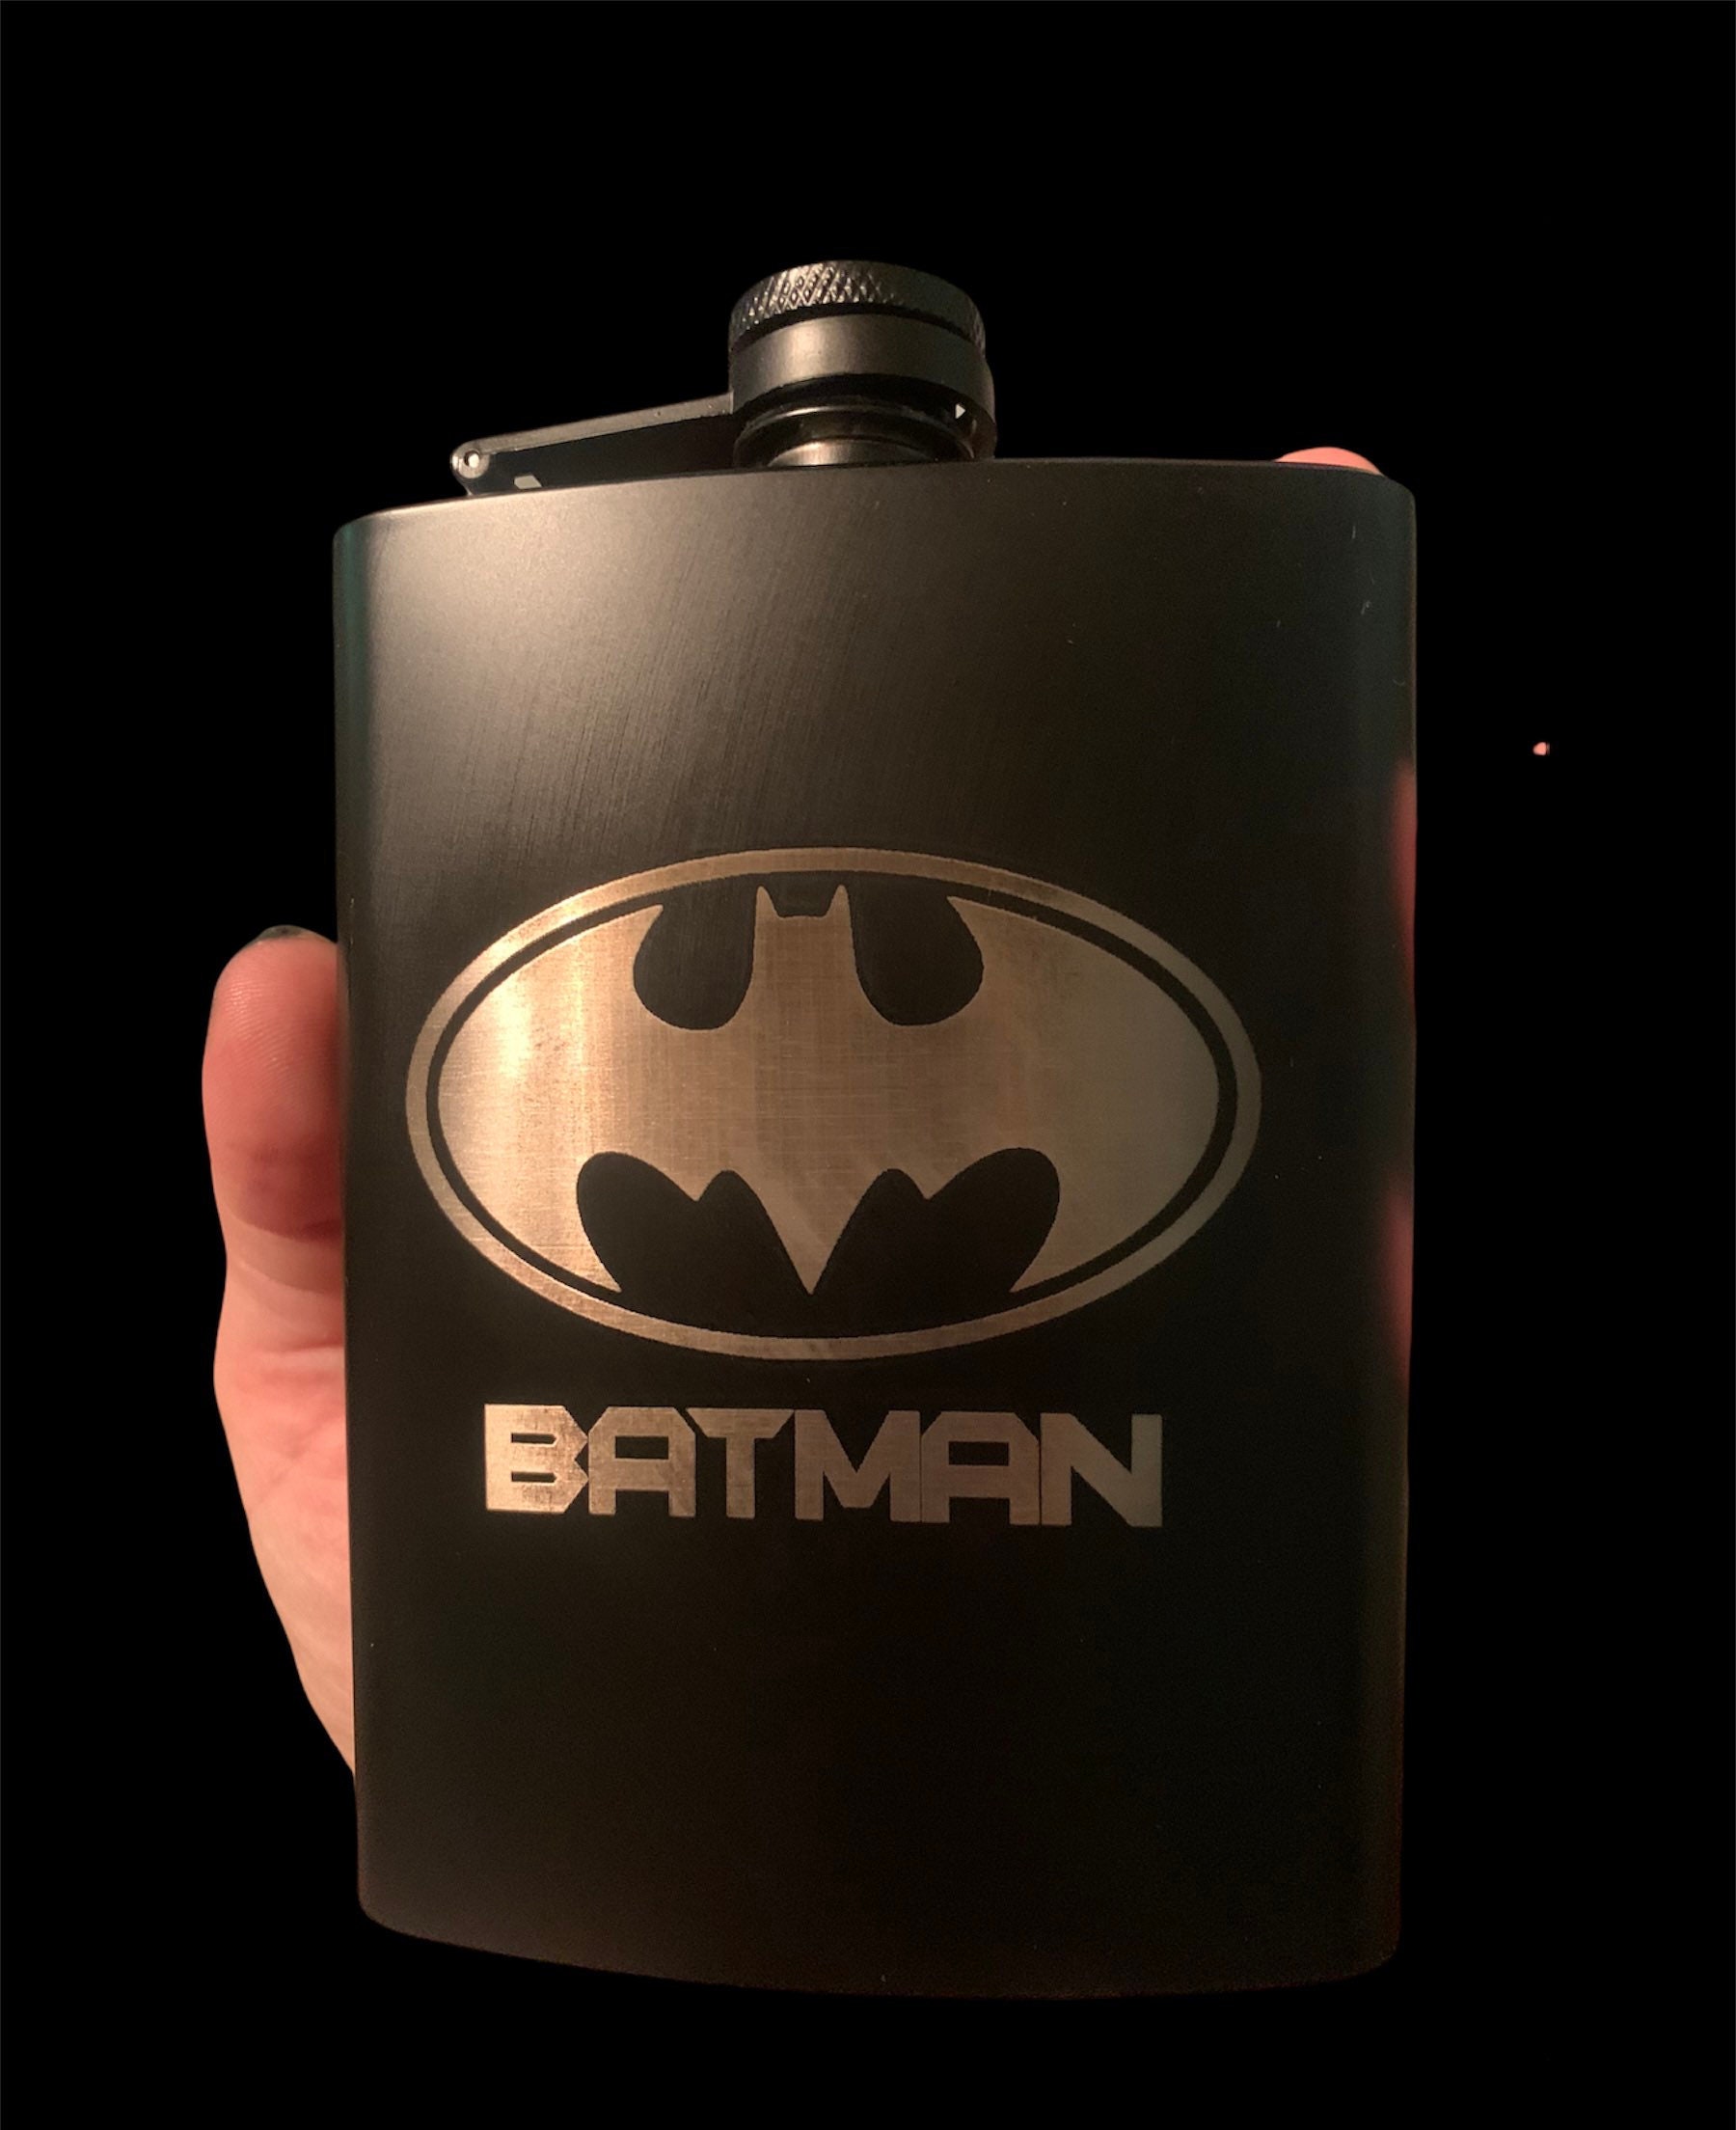 The Batman Engraved Flask 8 Oz - Etsy